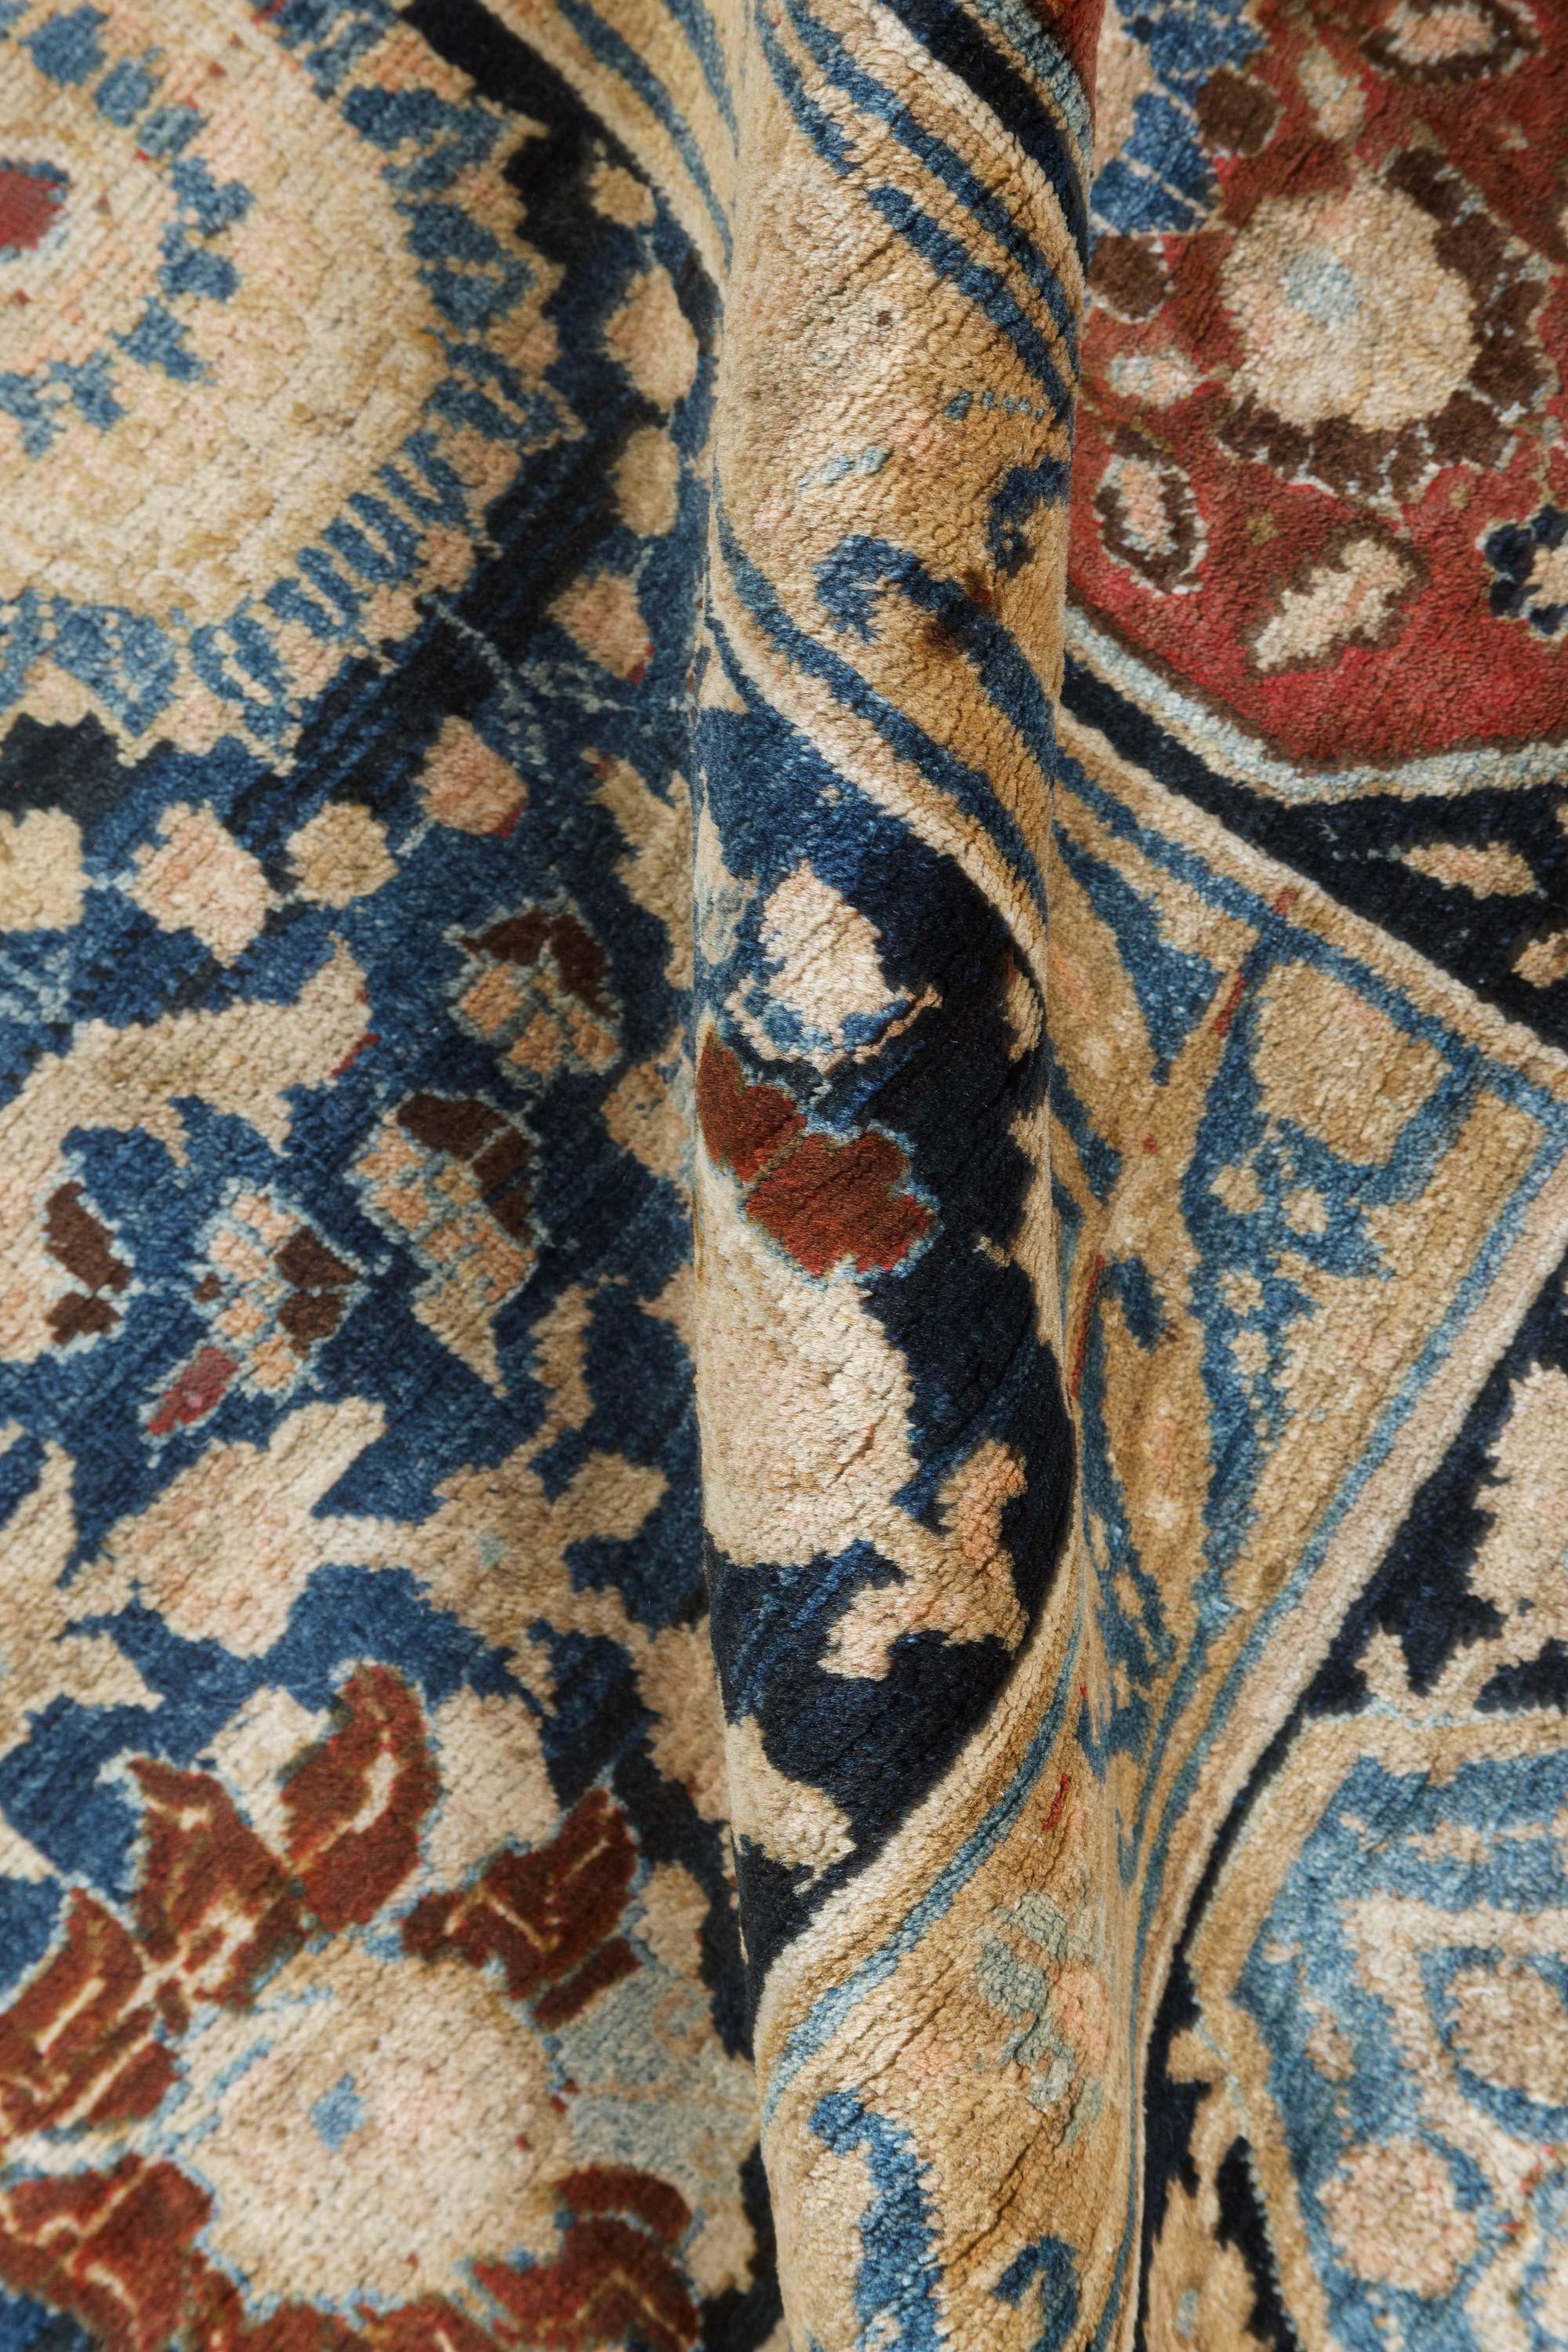 Antique Persian Tabriz Botanic Blue Red Beige Handmade Wool Carpet
Size: 10'5